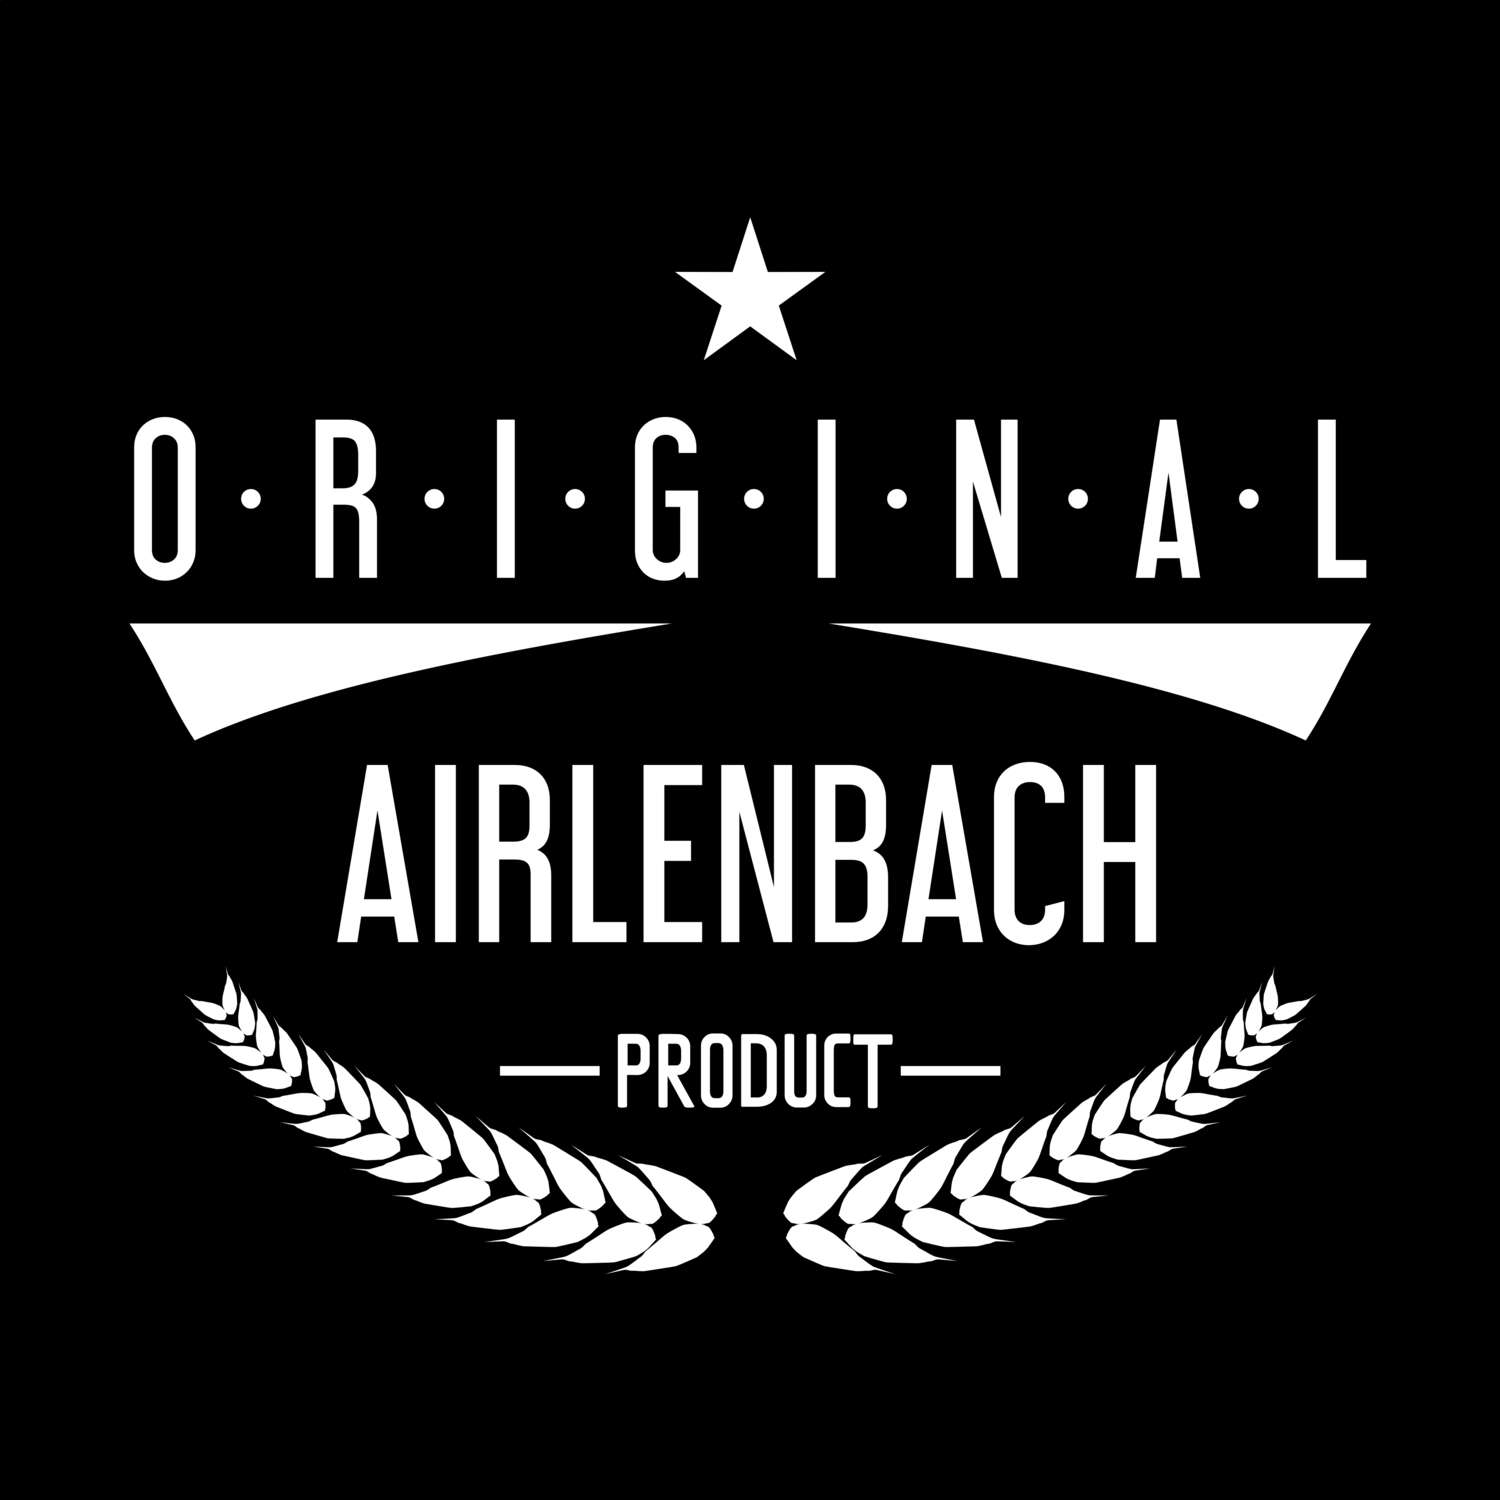 Airlenbach T-Shirt »Original Product«